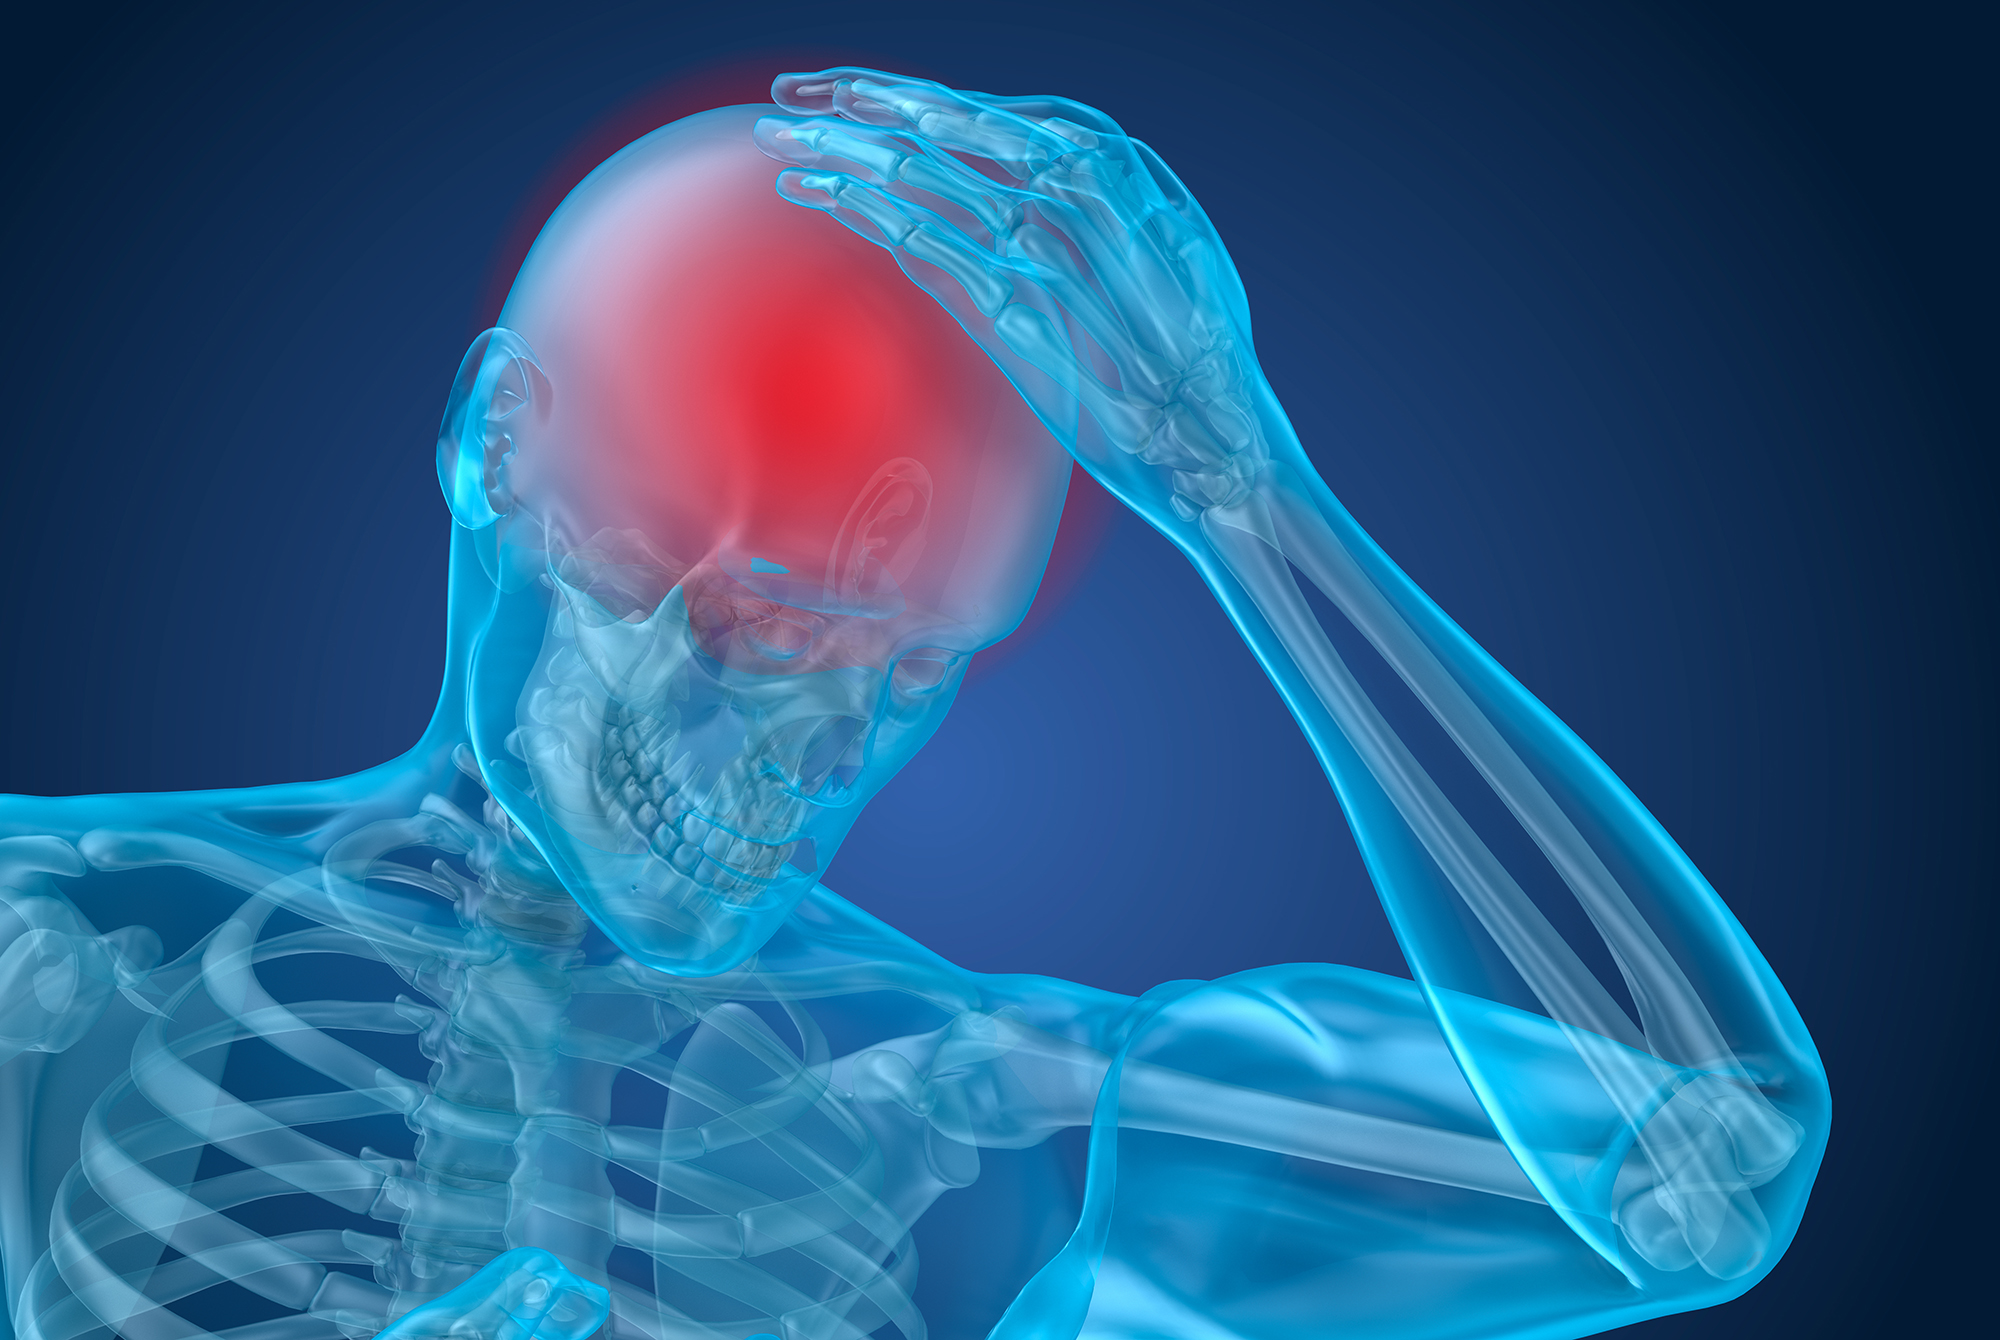 Head pain Attack, man suffering from brain pain. 3D illustration